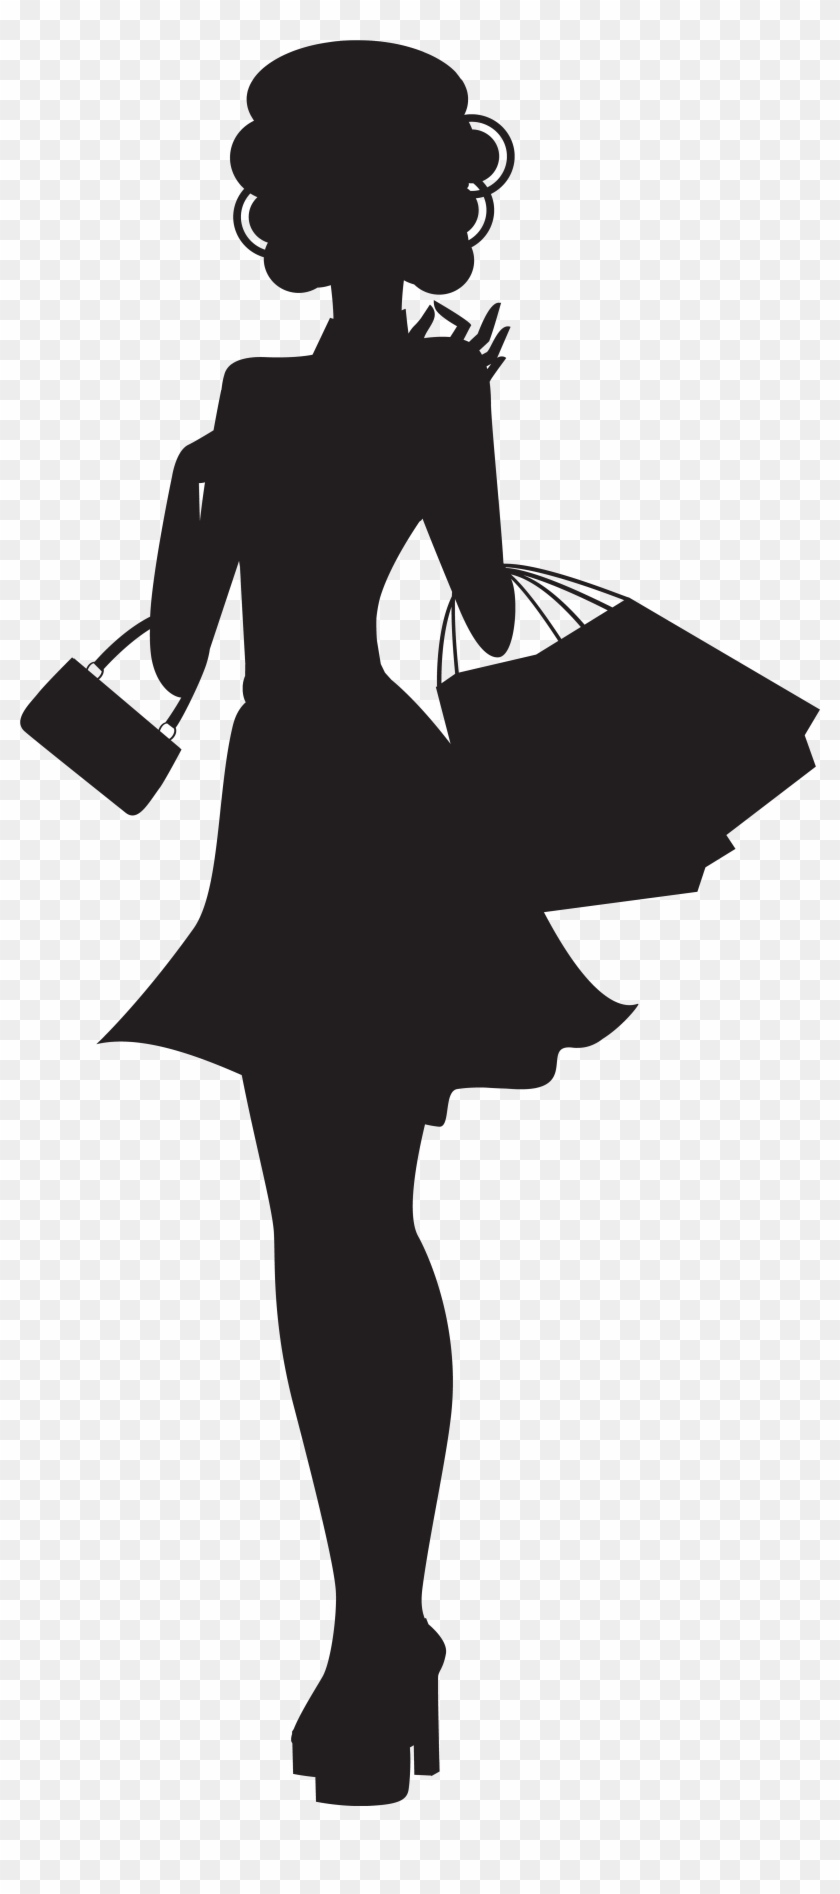 Shopping Woman Silhouette Png Clip Art - Shopping Woman Silhouette Png #368356